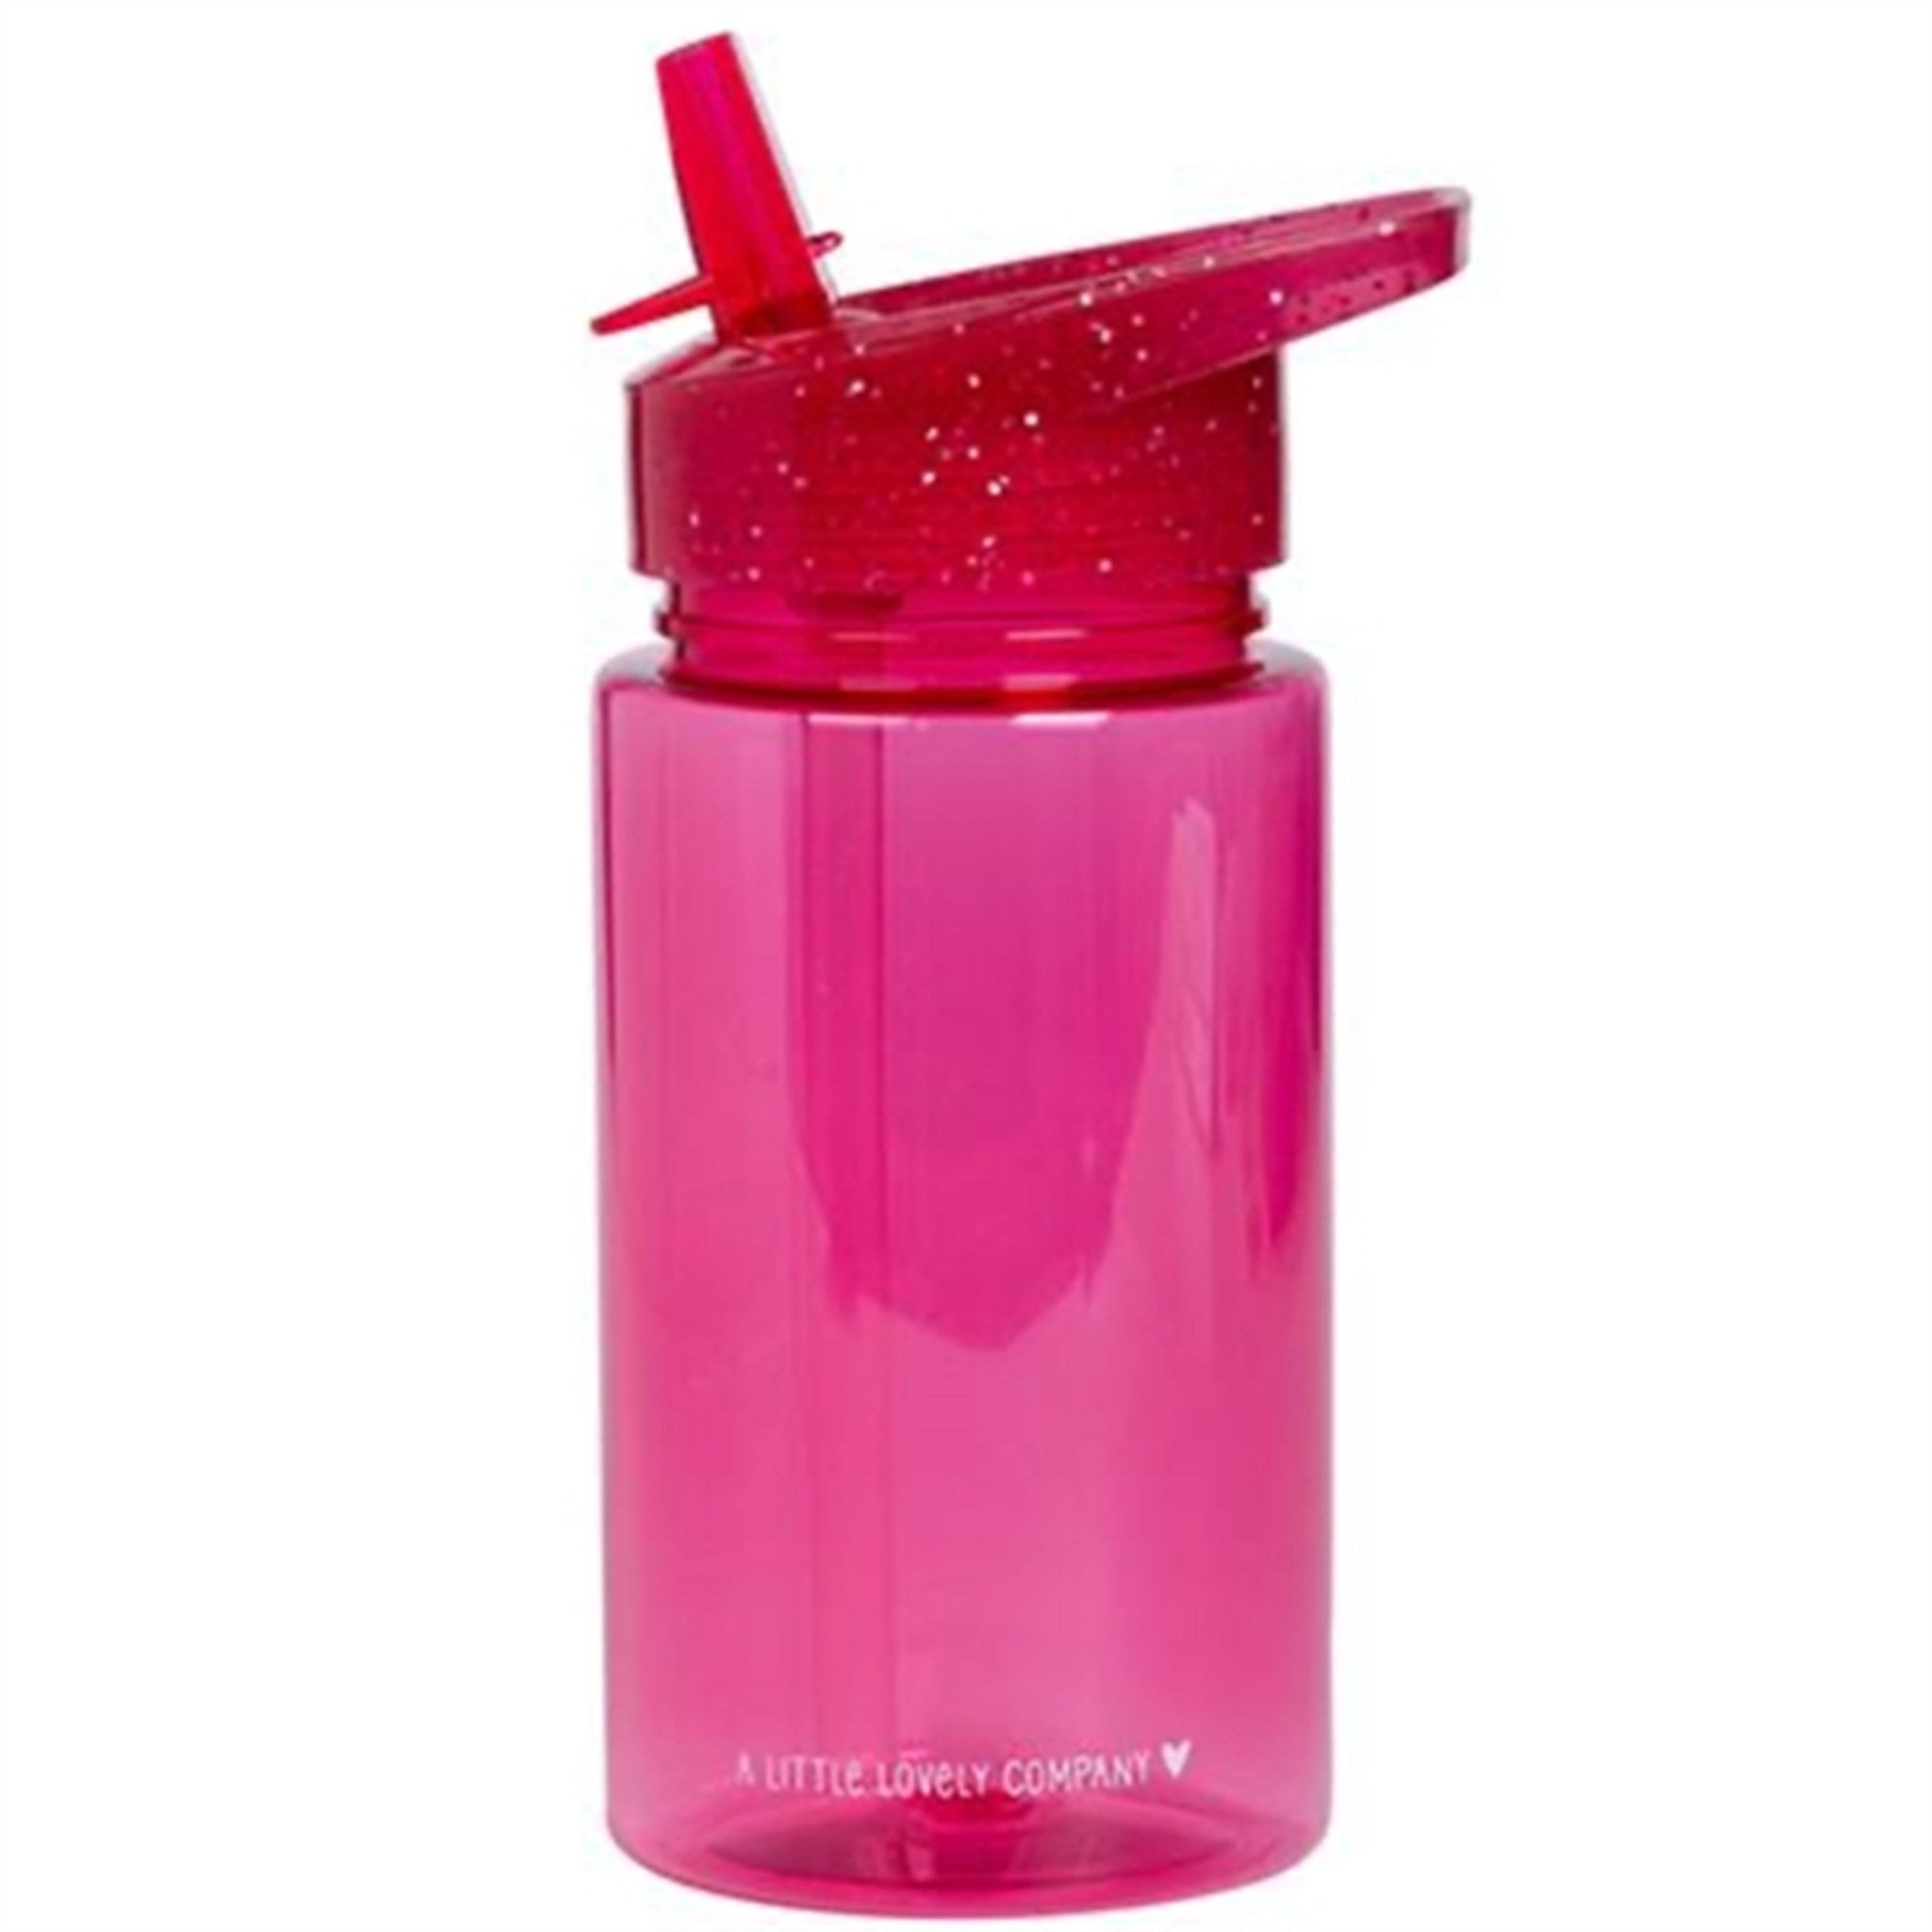 A Little Lovely Company Drink Bottle Glitter Pink